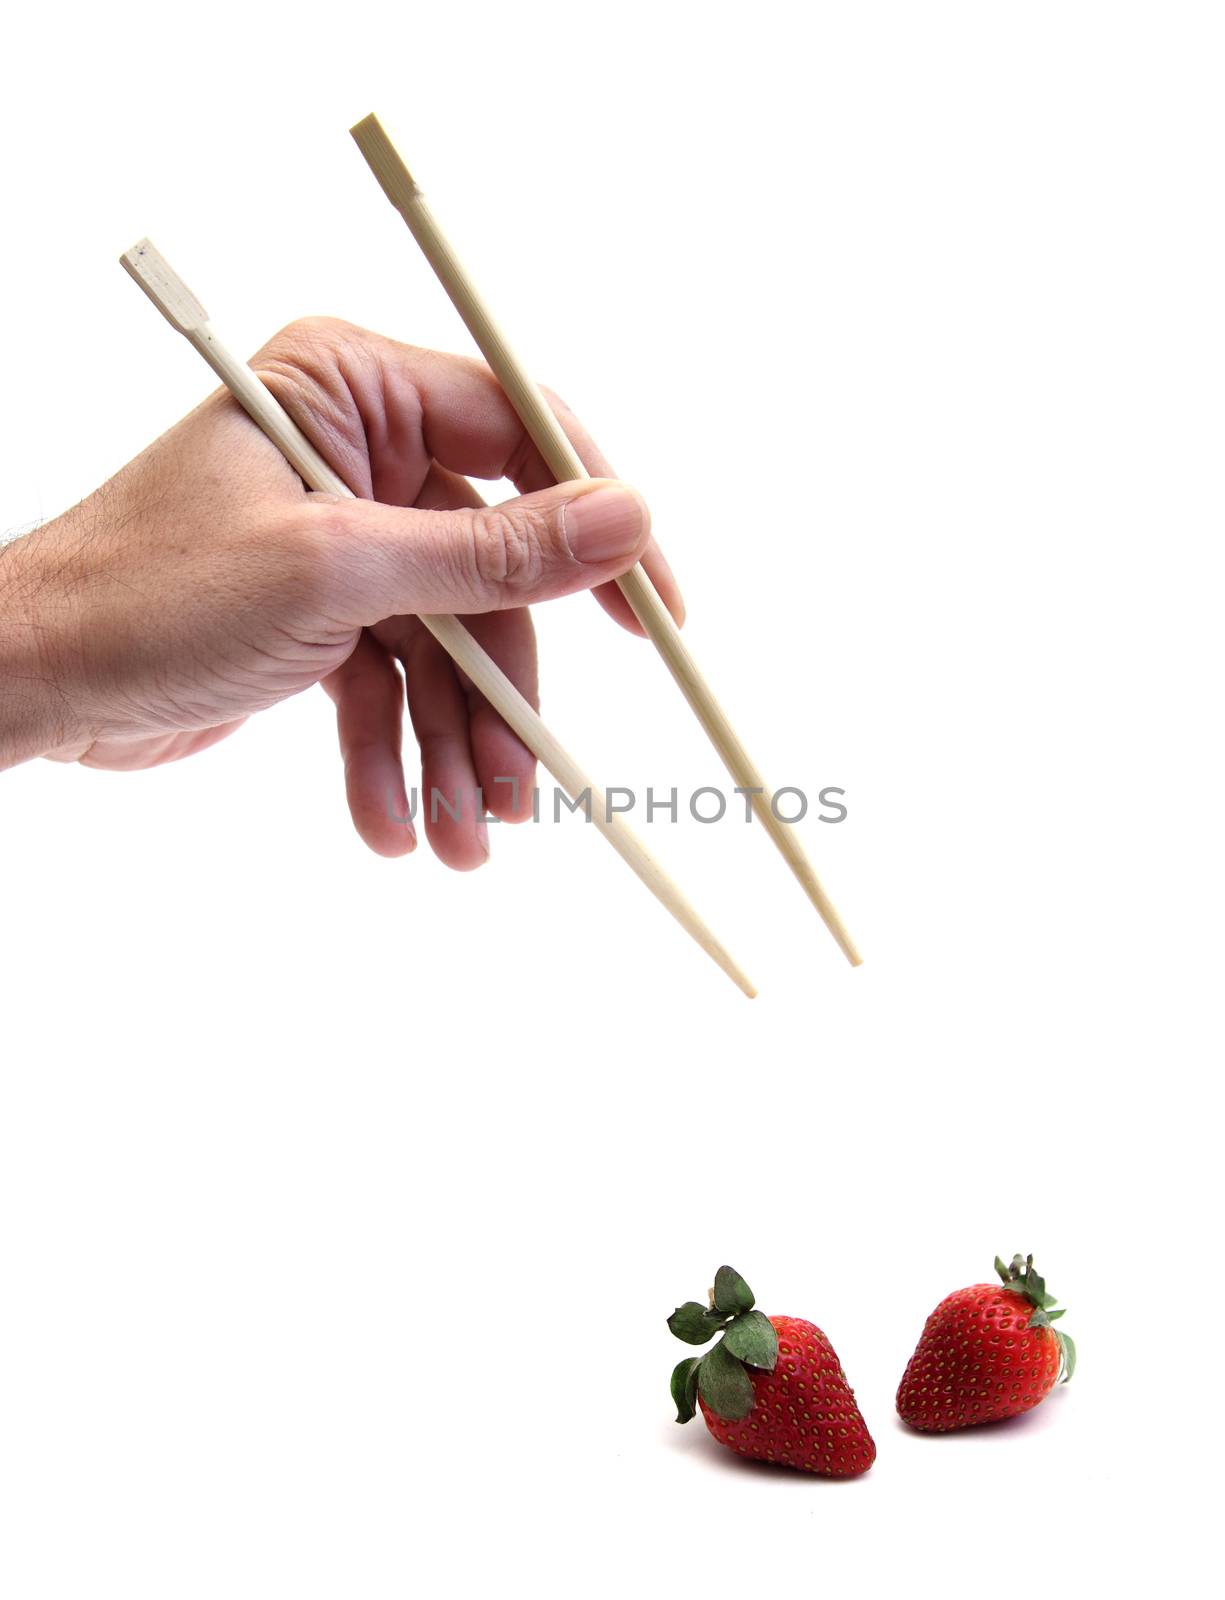 chopsticks and strawberries by gdvcom